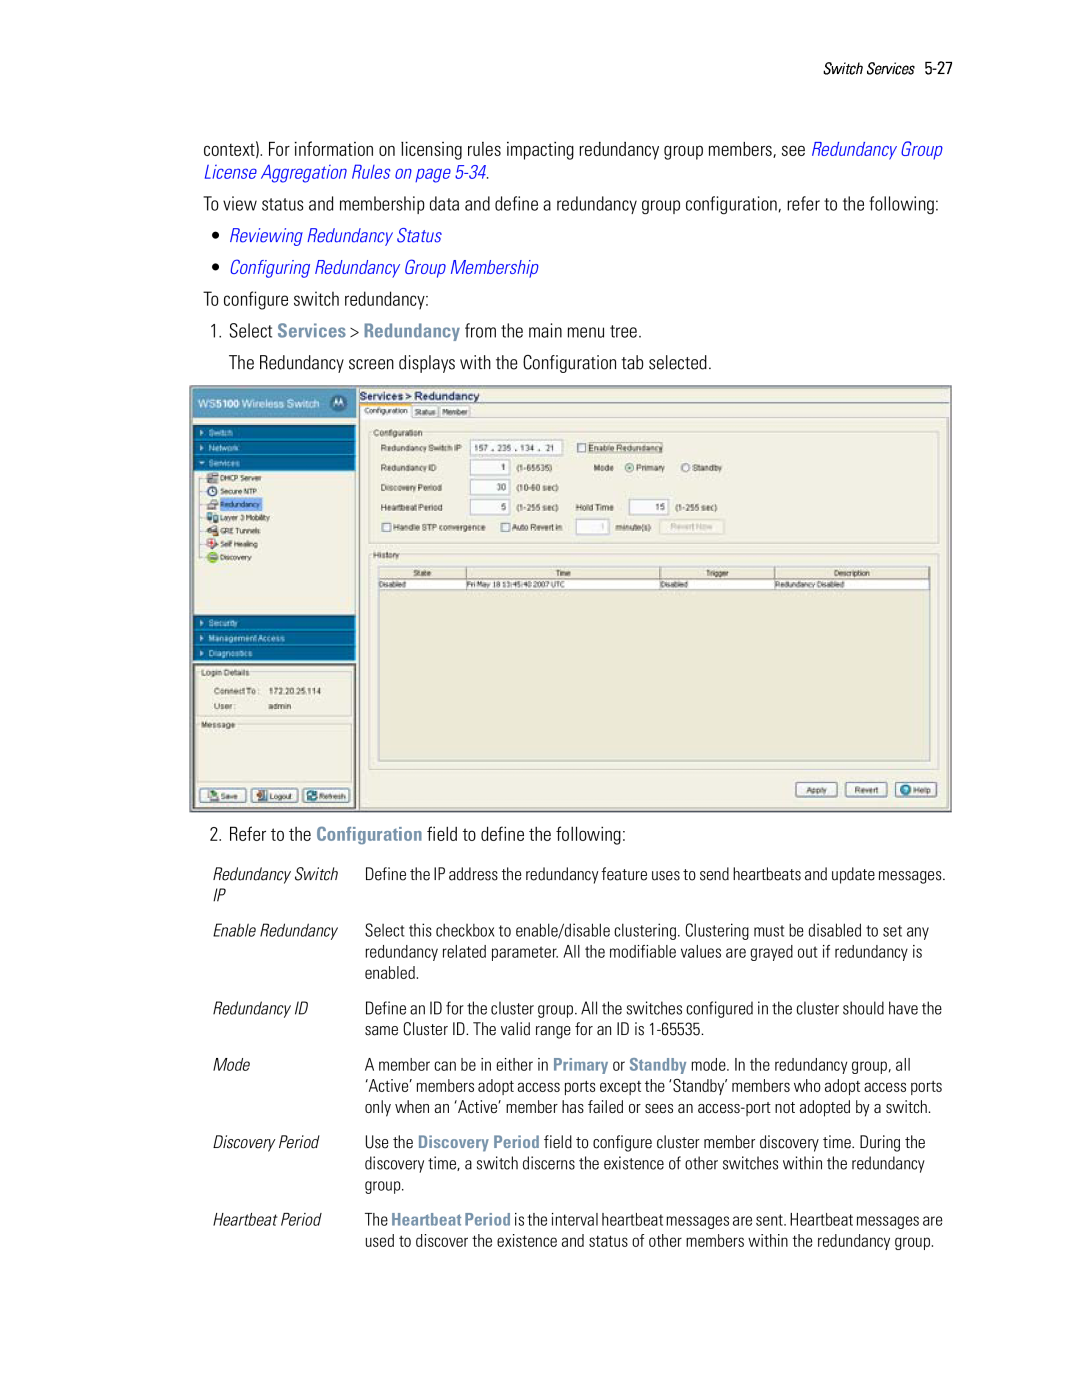 Motorola WS5100 •Reviewing Redundancy Status, •Configuring Redundancy Group Membership, To configure switch redundancy 